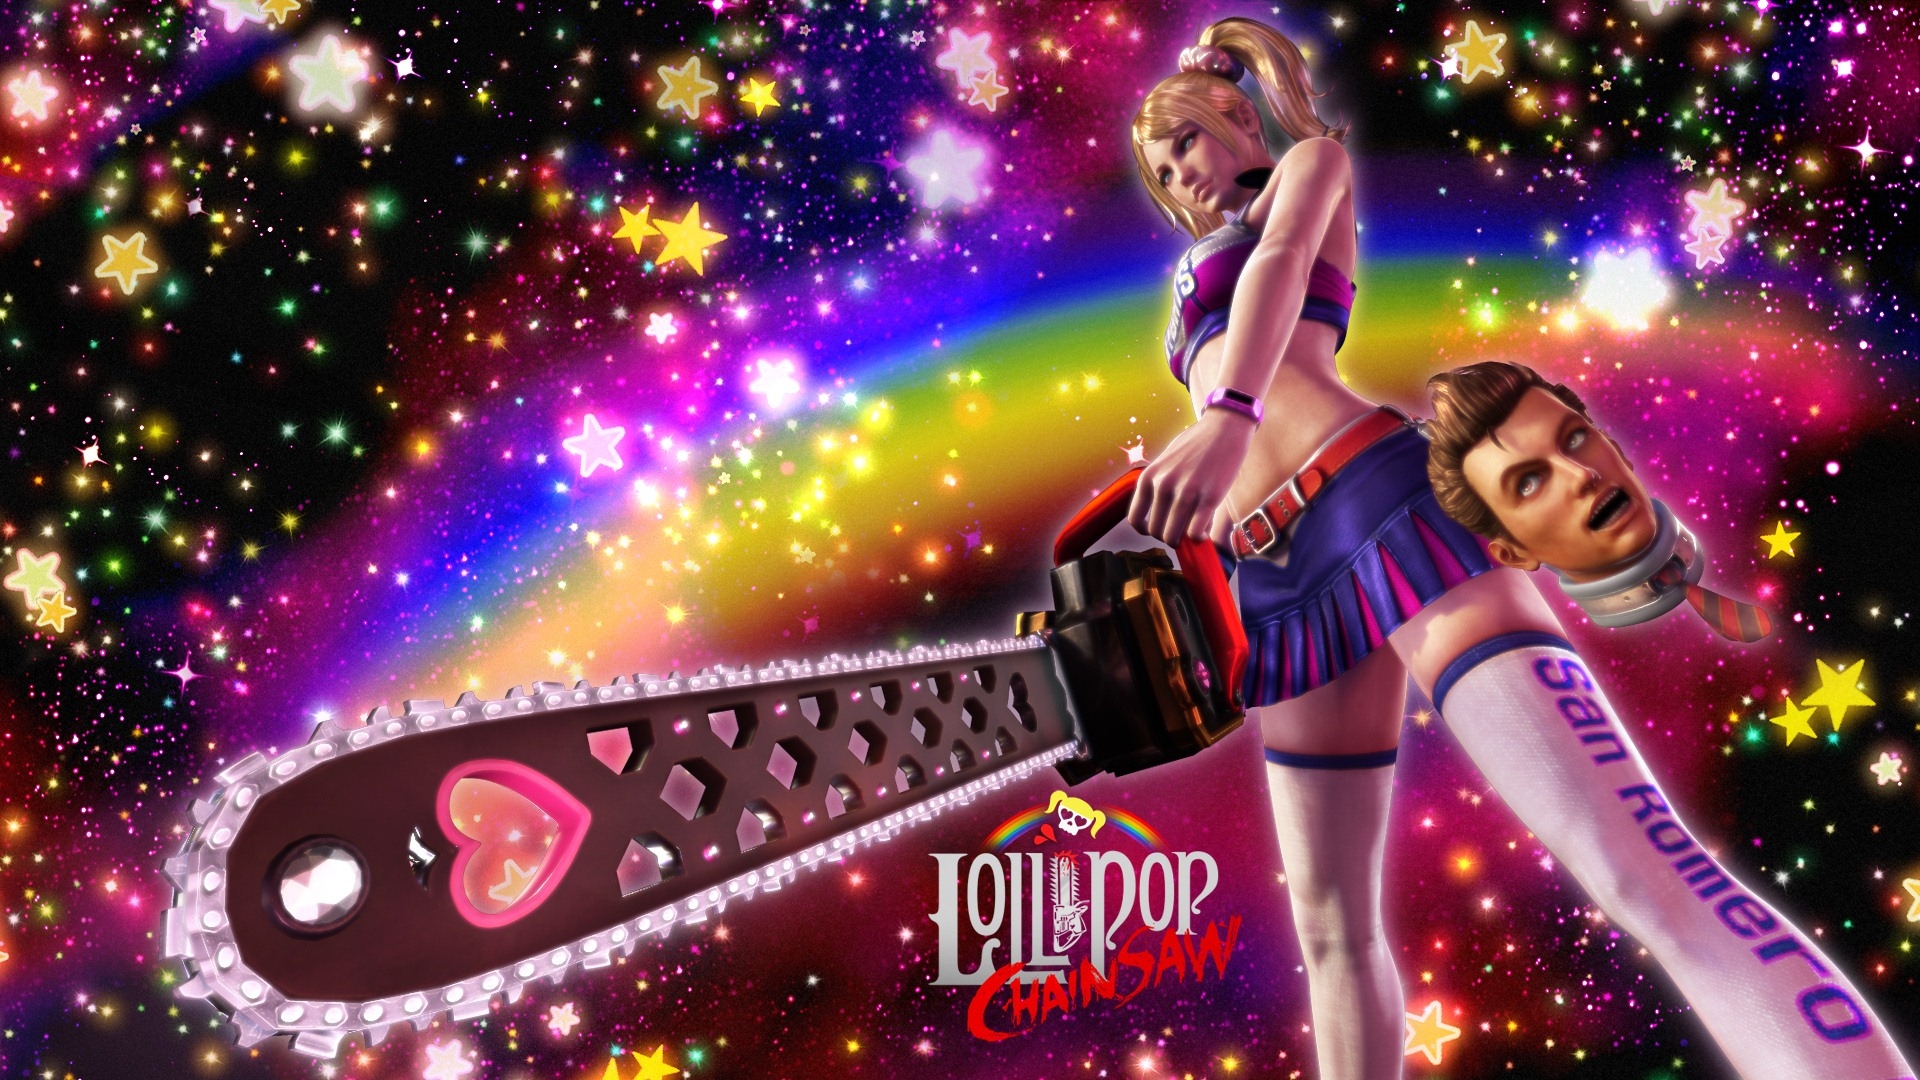 Lollipop ps3. Lollipop Chainsaw Xbox 360. Lollipop Chainsaw ps3. Lollipop Chainsaw бензопилы.